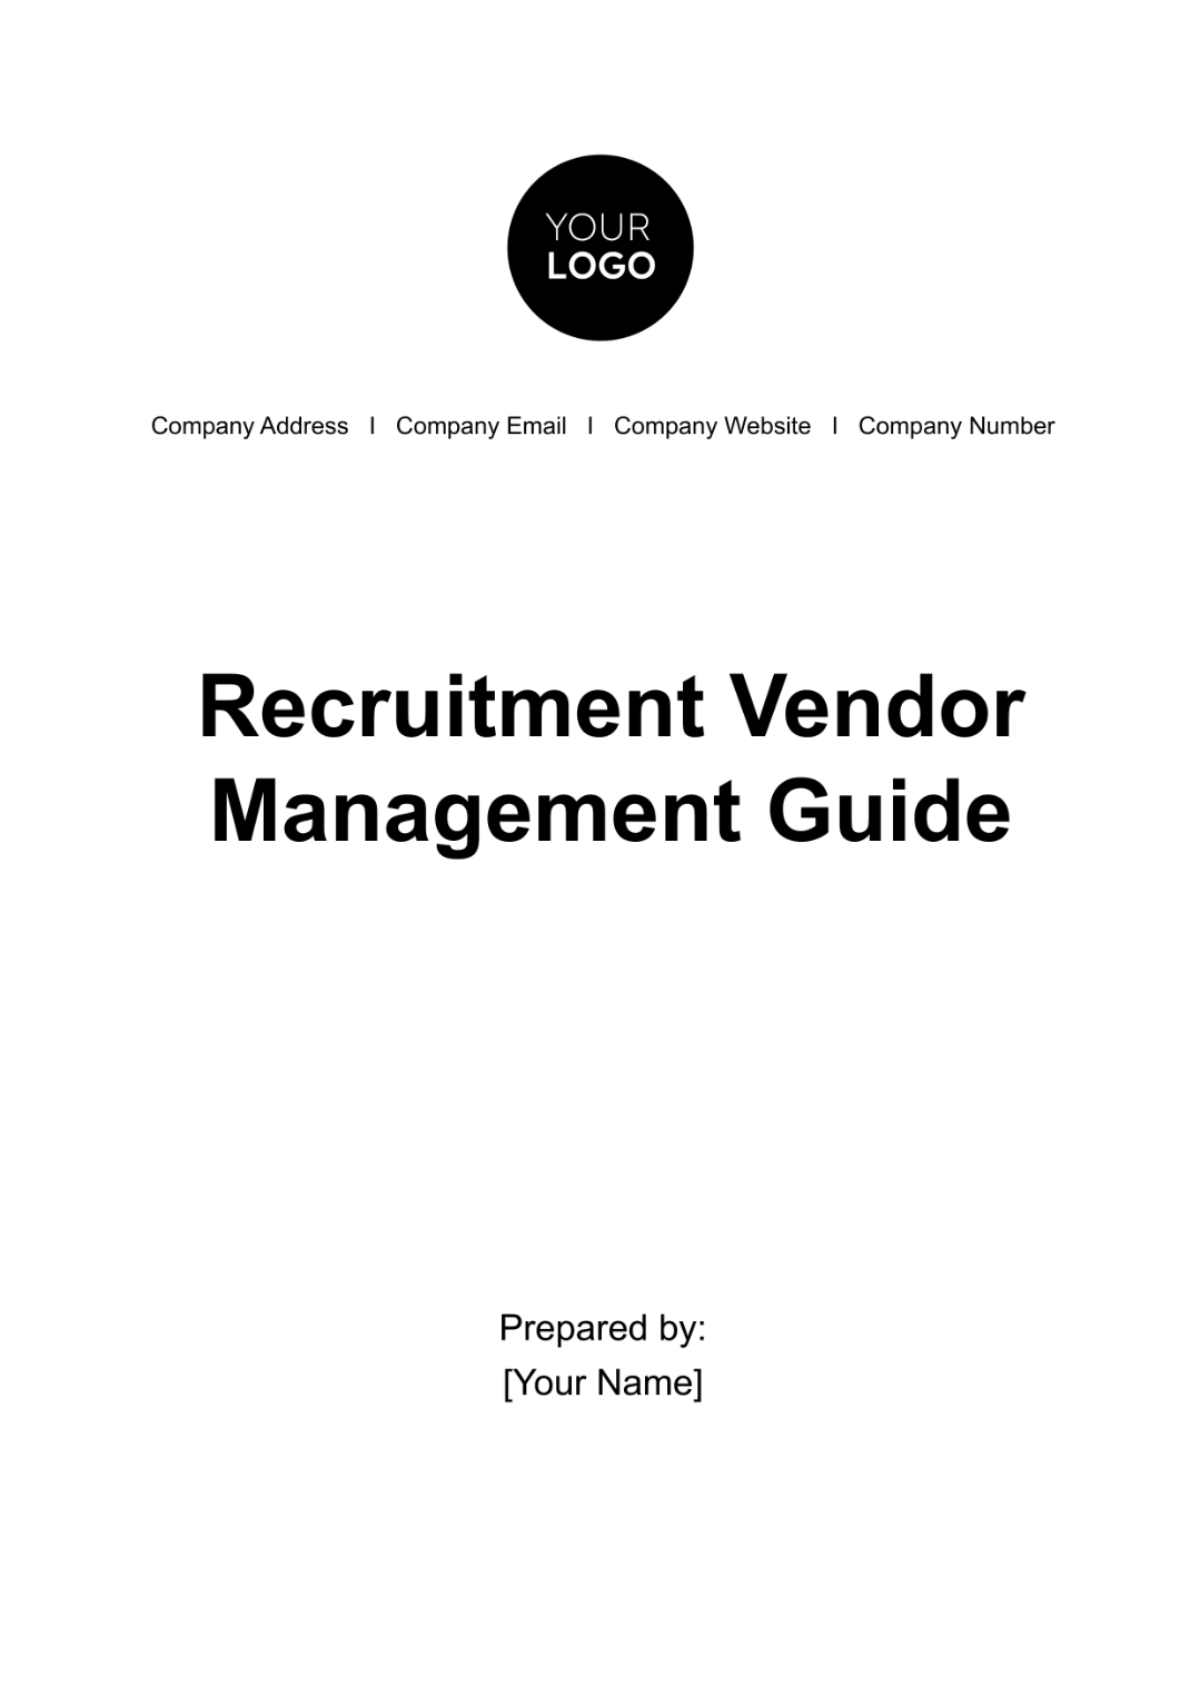 Free Recruitment Vendor Management Guide HR Template